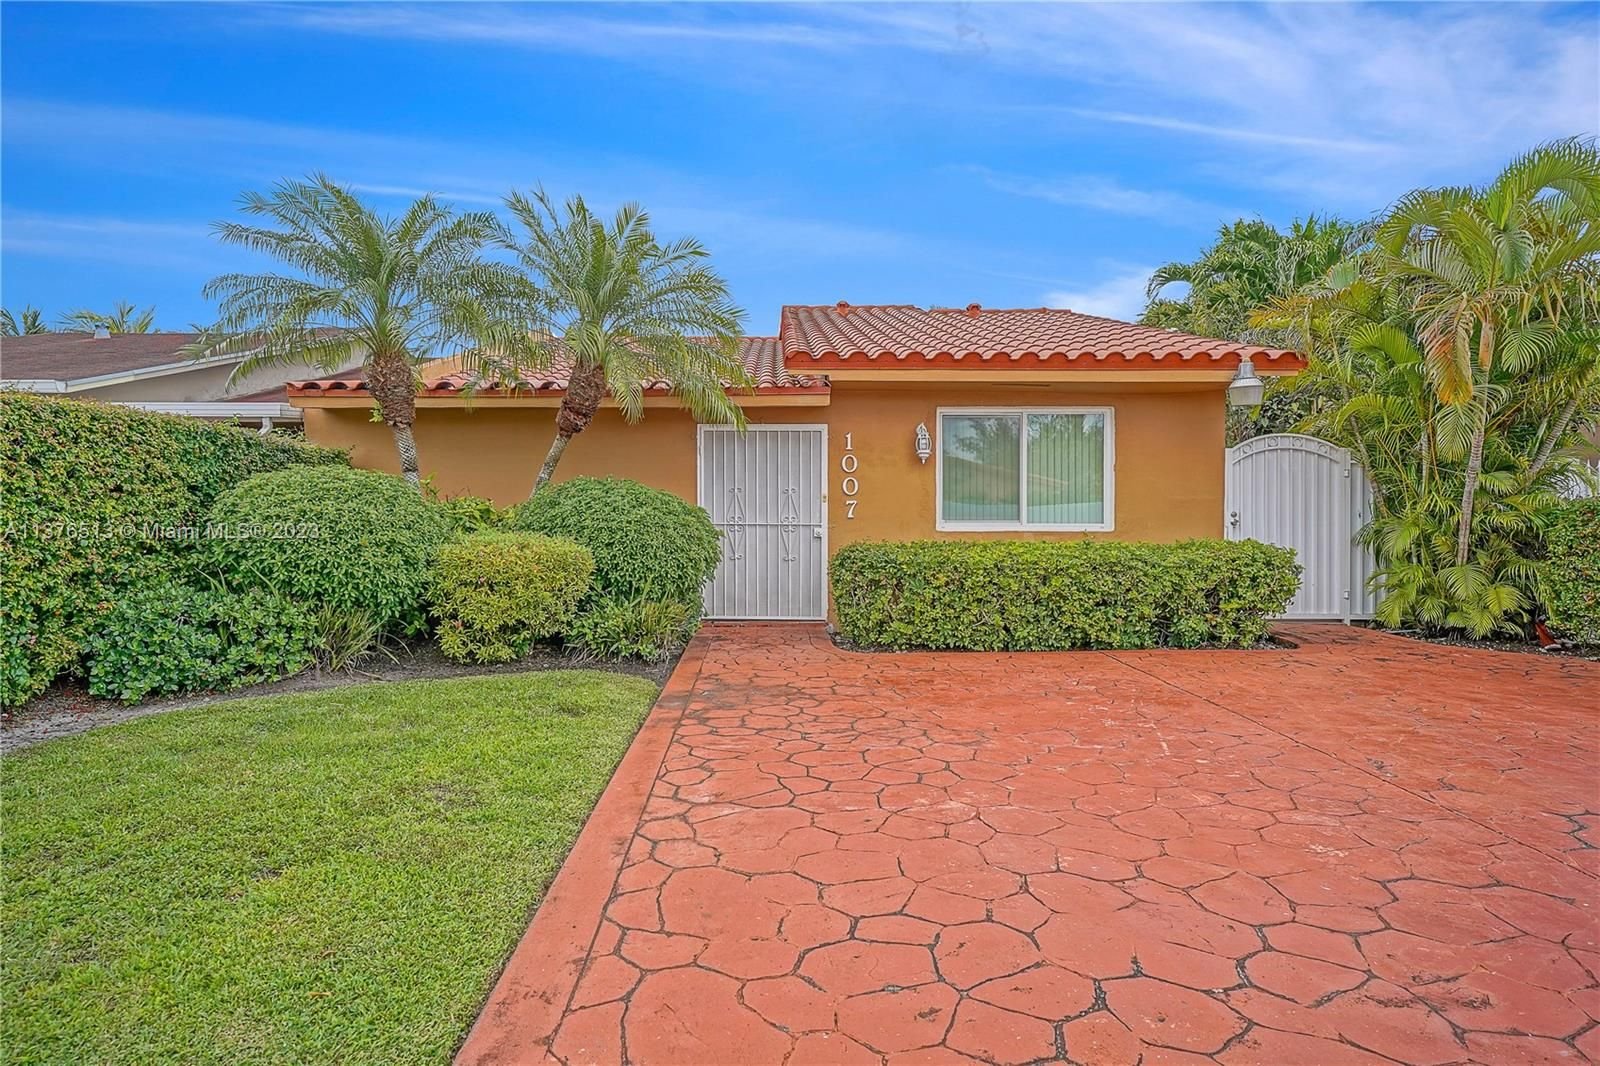 Real estate property located at 1007 119th Ct #a2, Miami-Dade County, Miami, FL